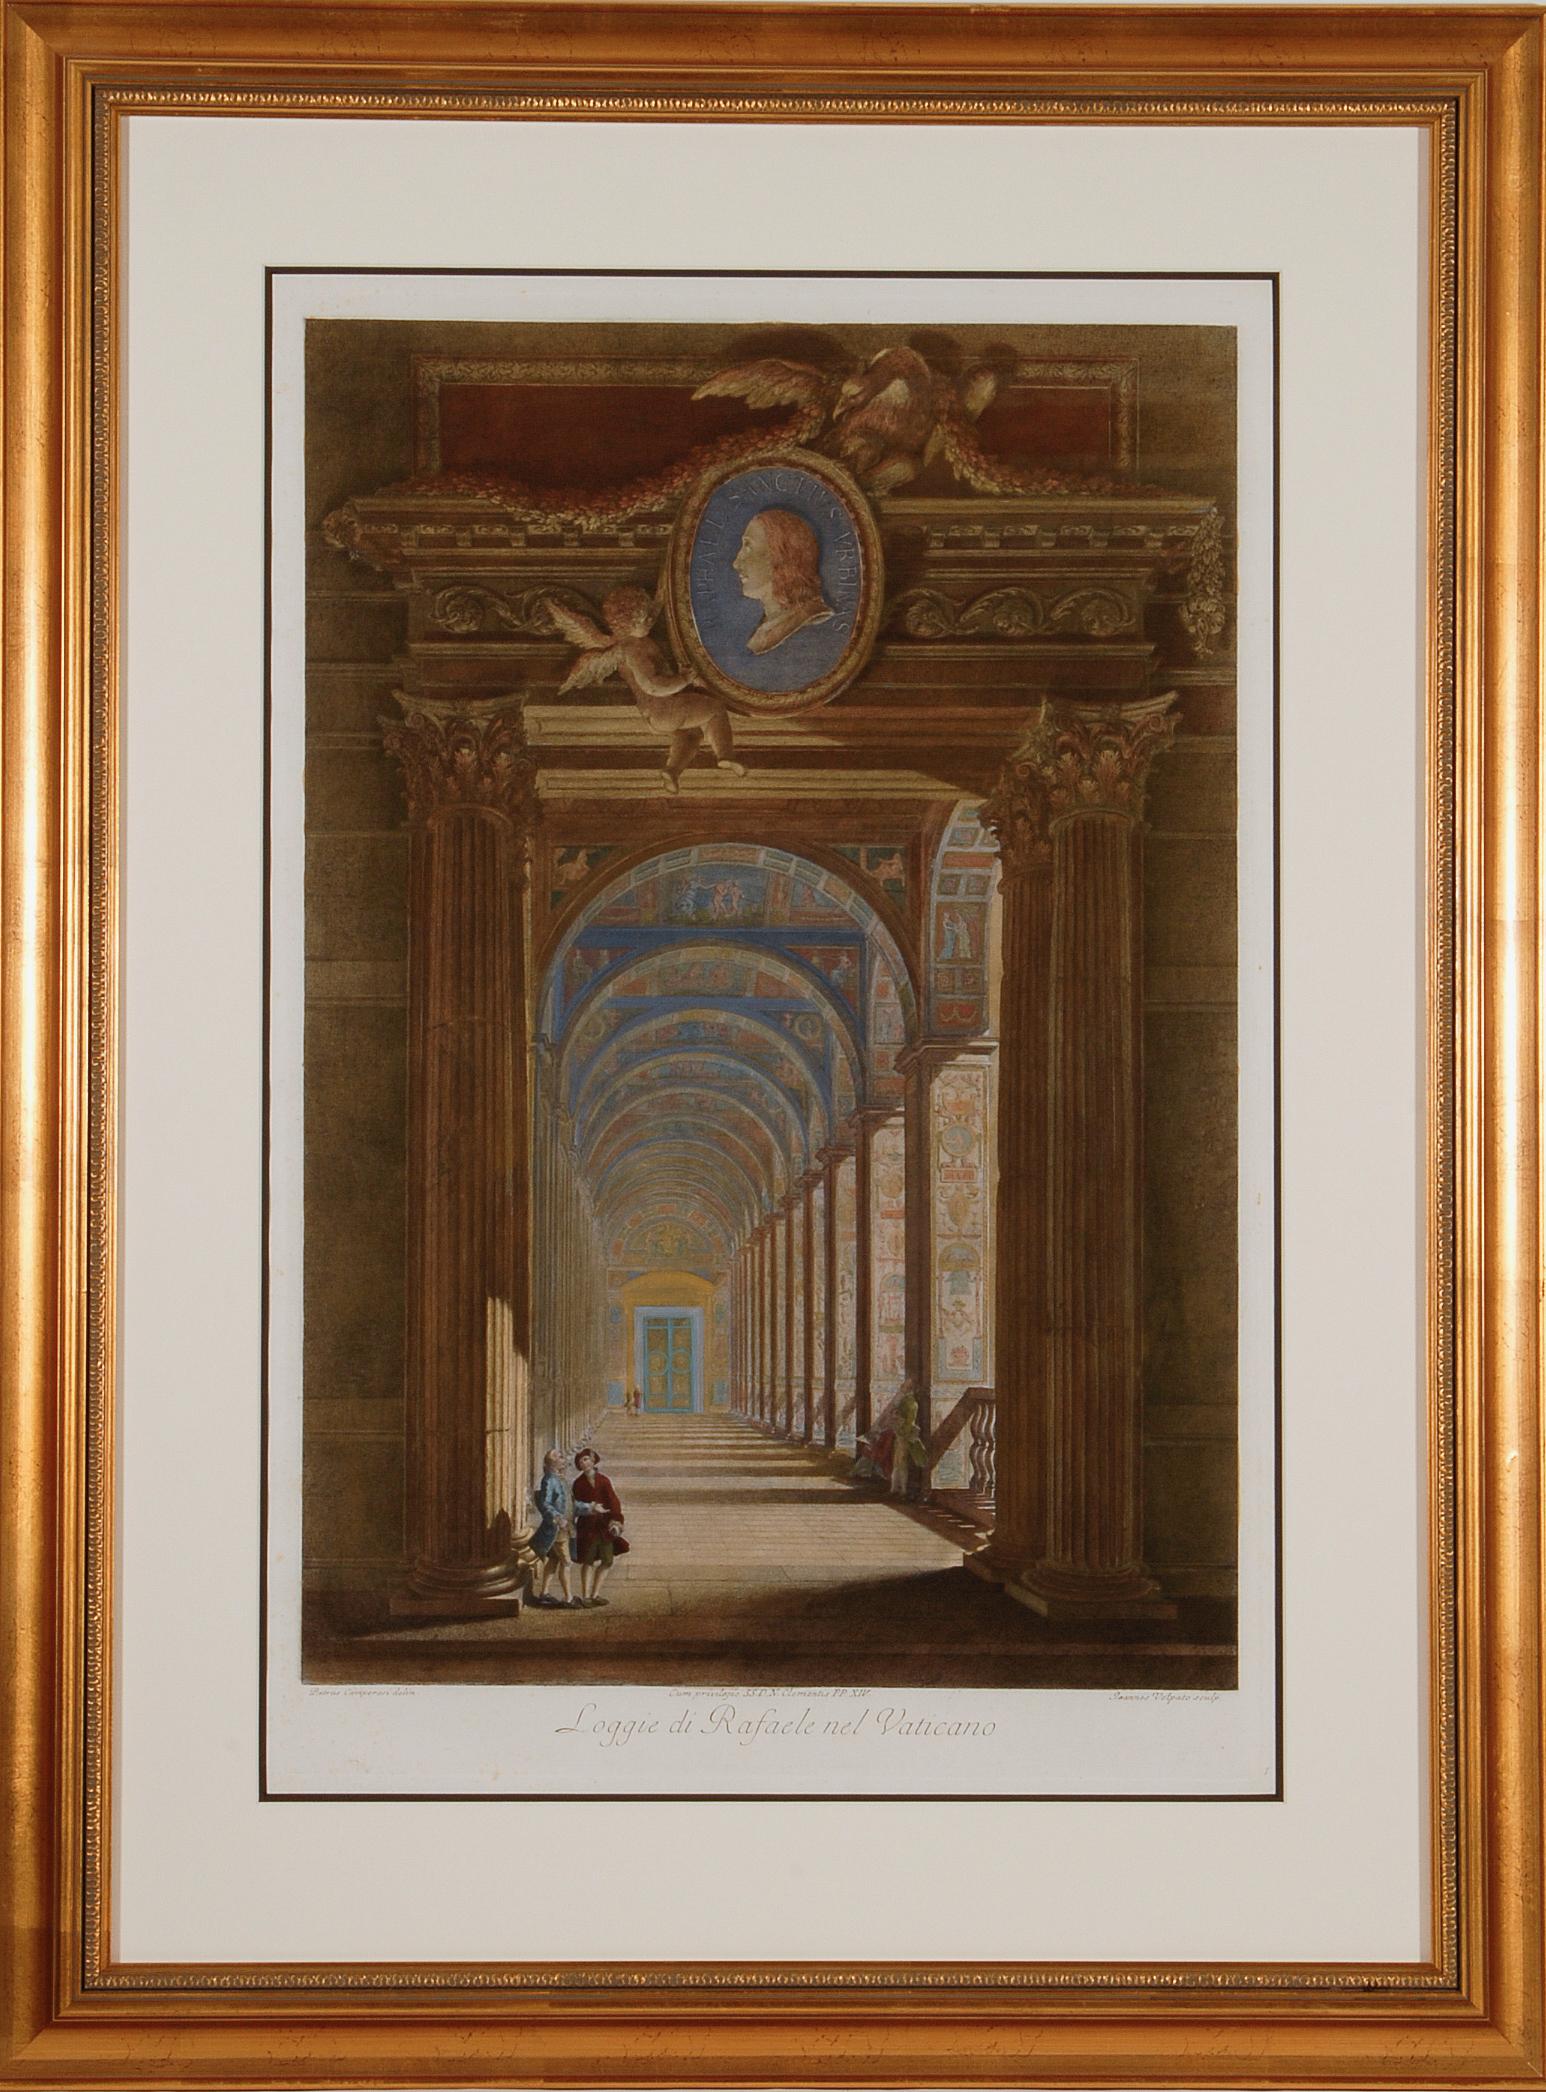  Loggie di Rafaele nel Vaticano: Handkolorierte Gravur von Volpato aus dem 18. Jahrhundert